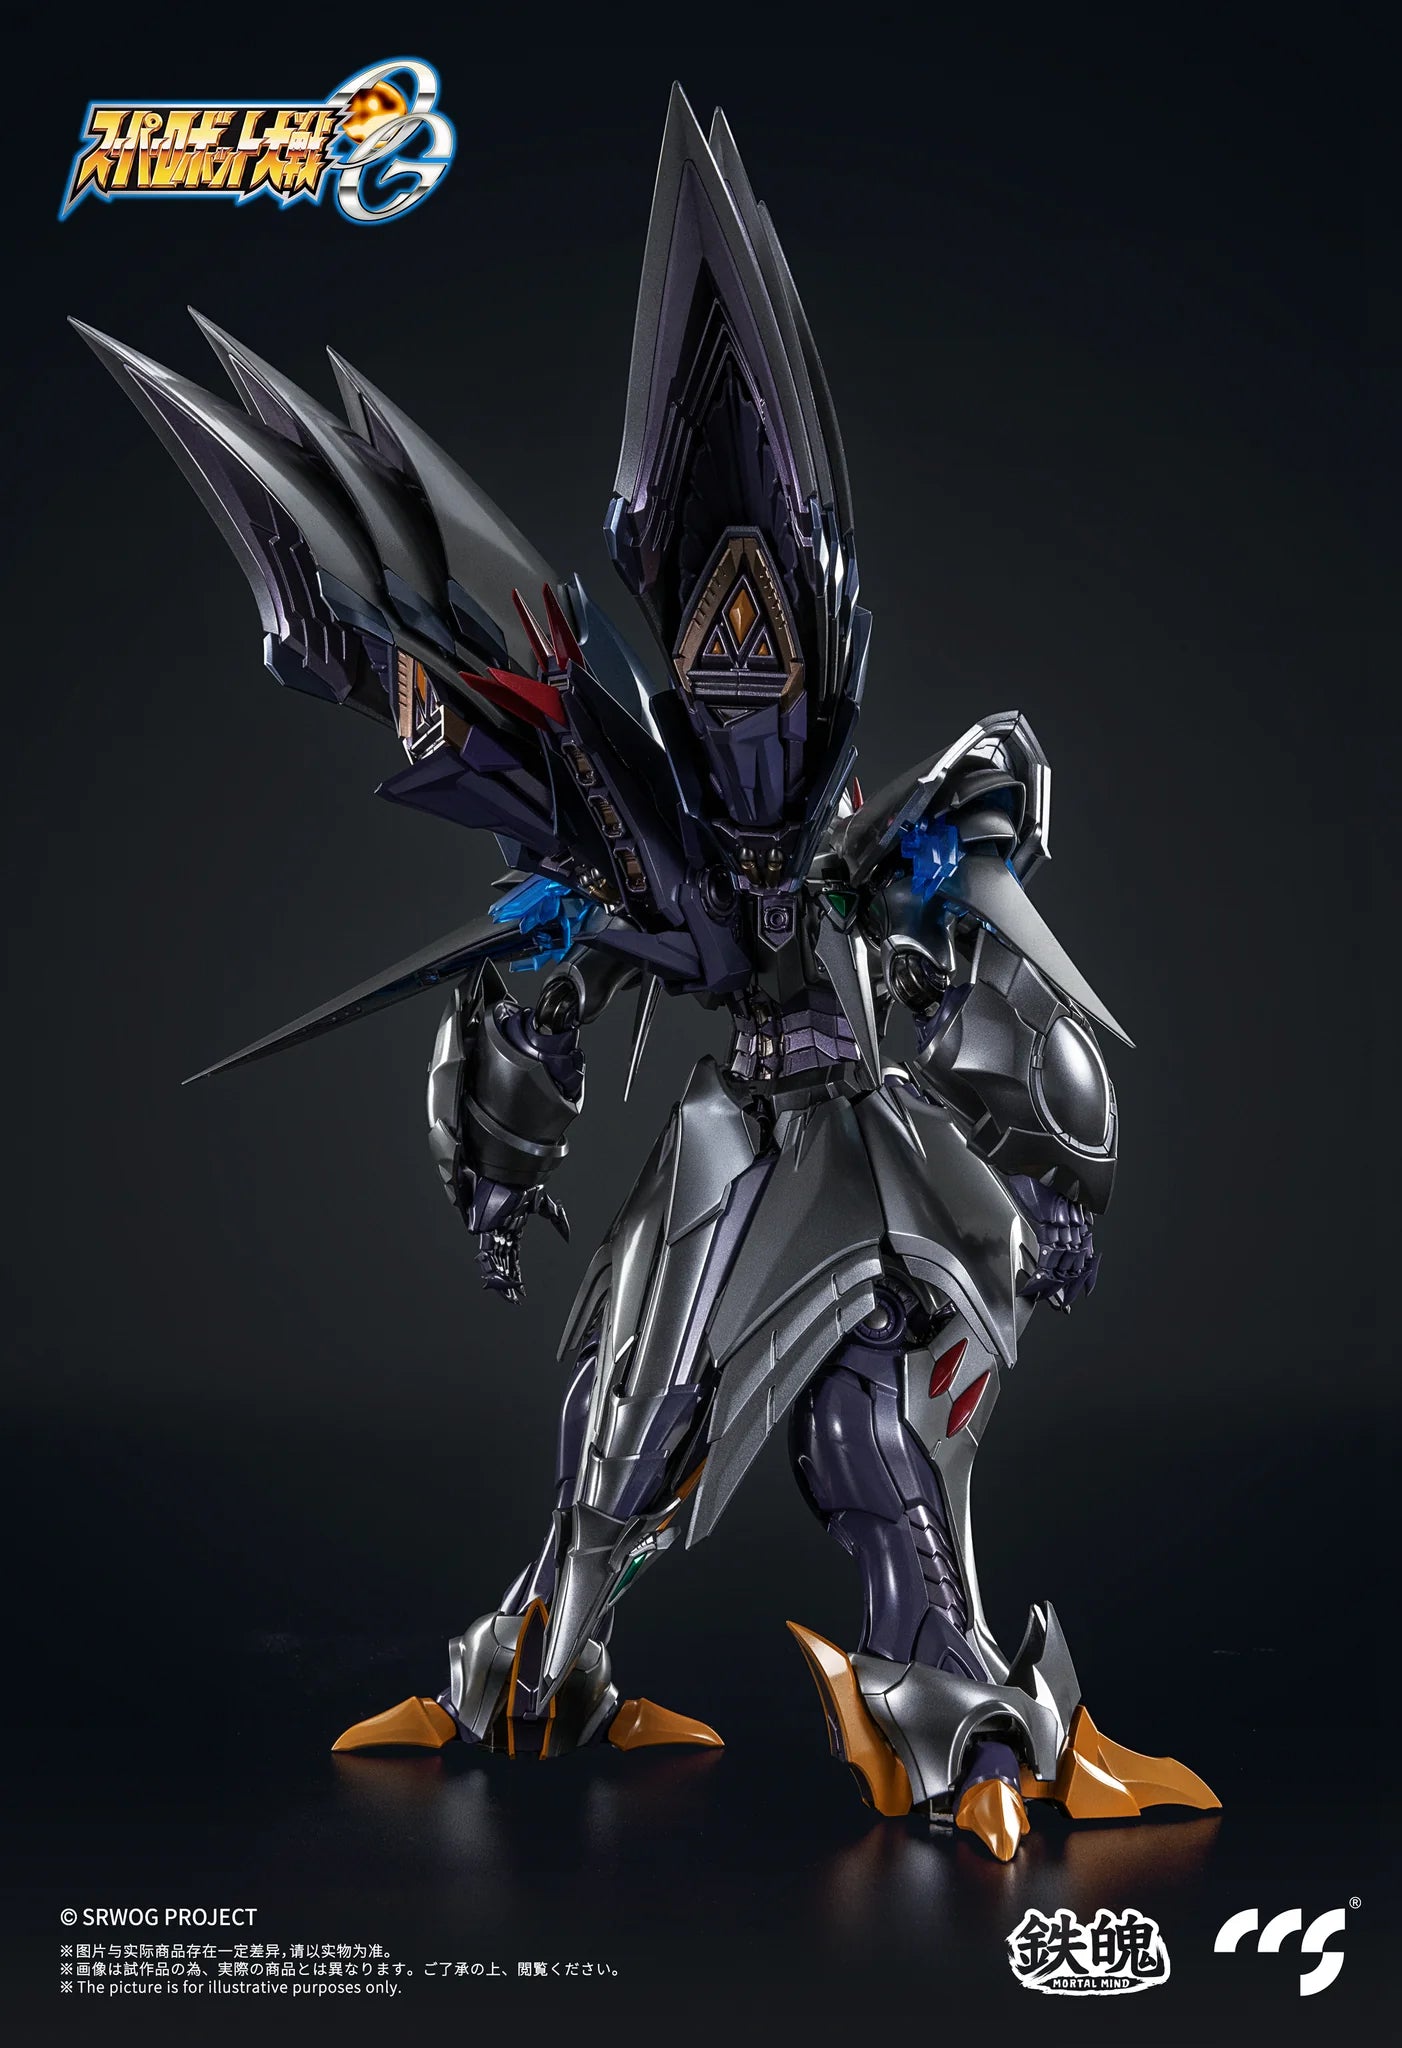 SQUARE ENIX PLAY ARTS KAI Monster Hunter Cross Diablos Armor (Rage Series)  Action Figure, Figures & Plastic Kits